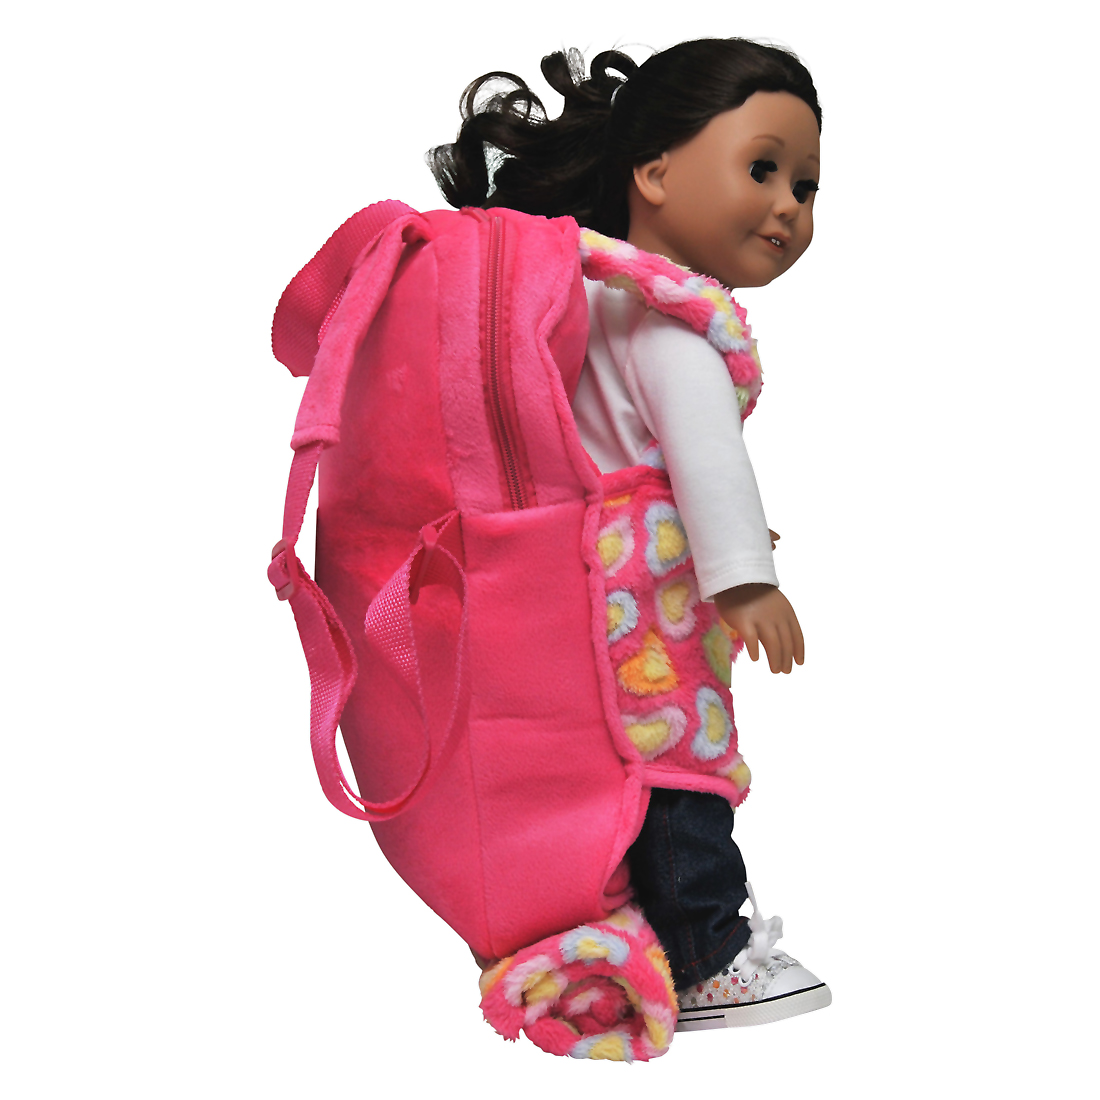 18 doll backpack